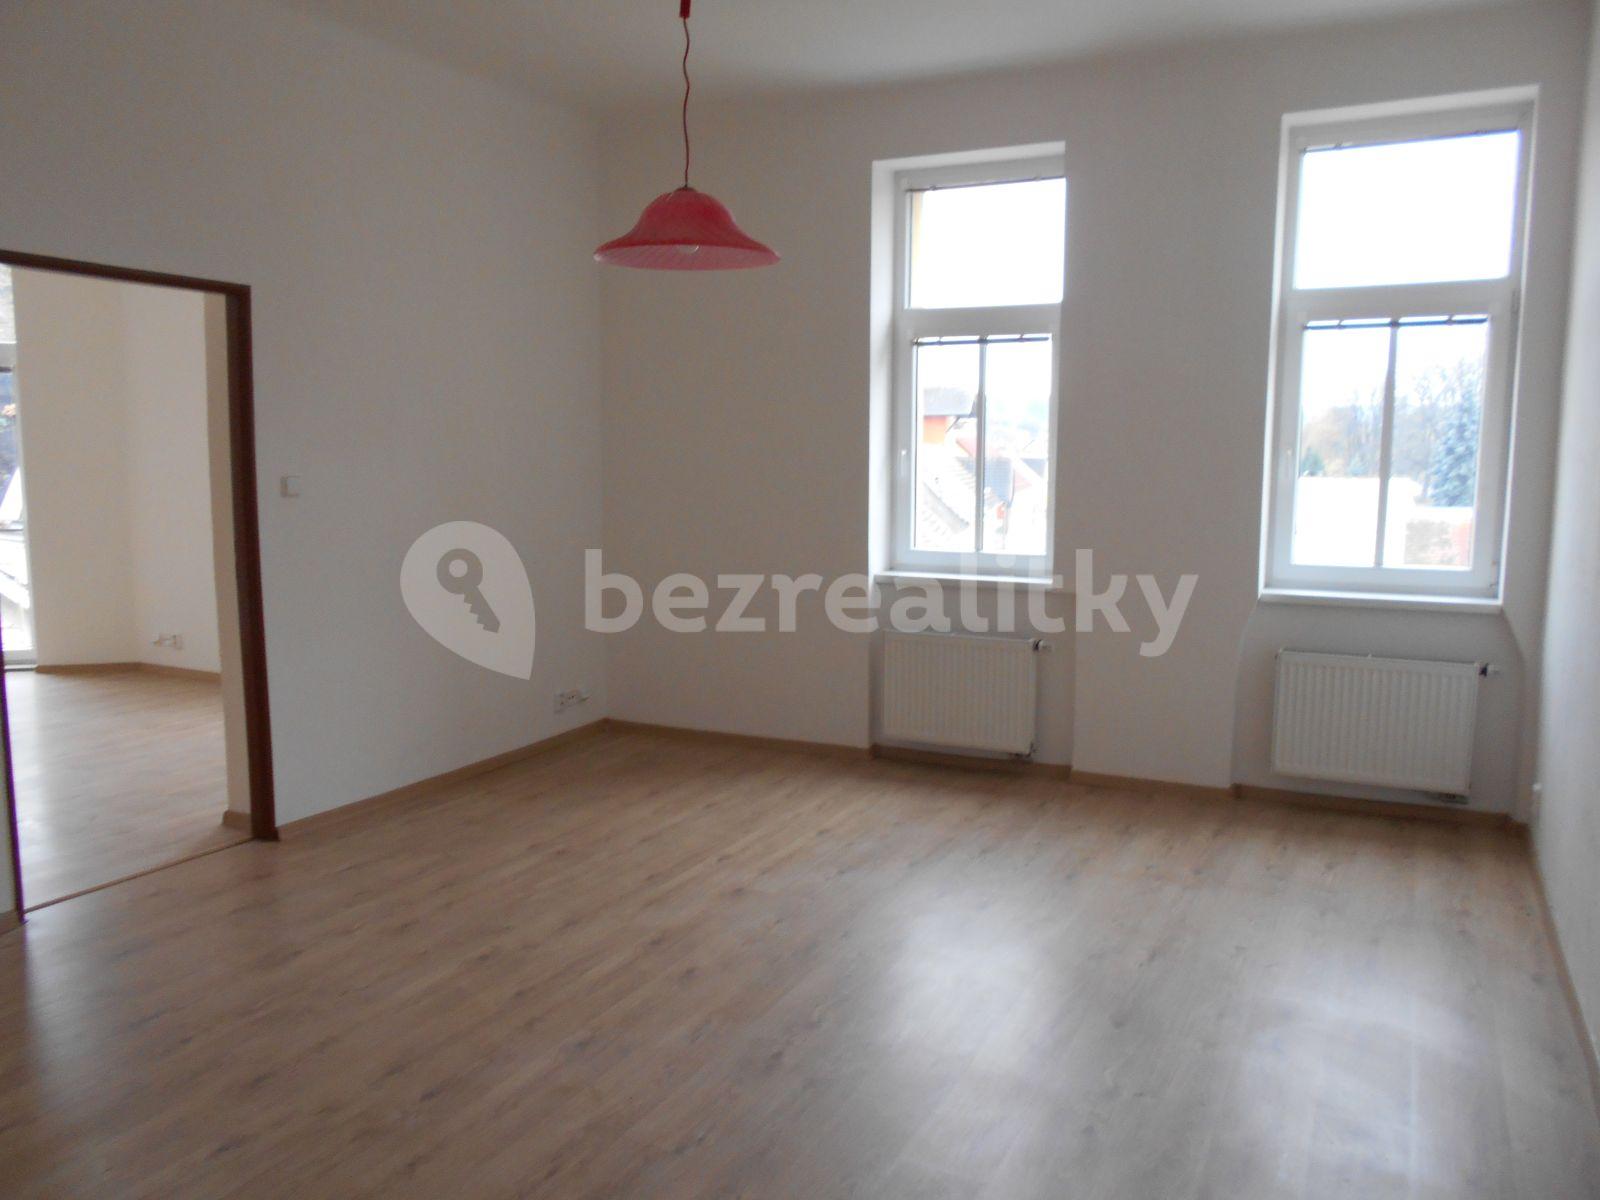 2 bedroom flat to rent, 73 m², Legií, Týn nad Vltavou, Jihočeský Region